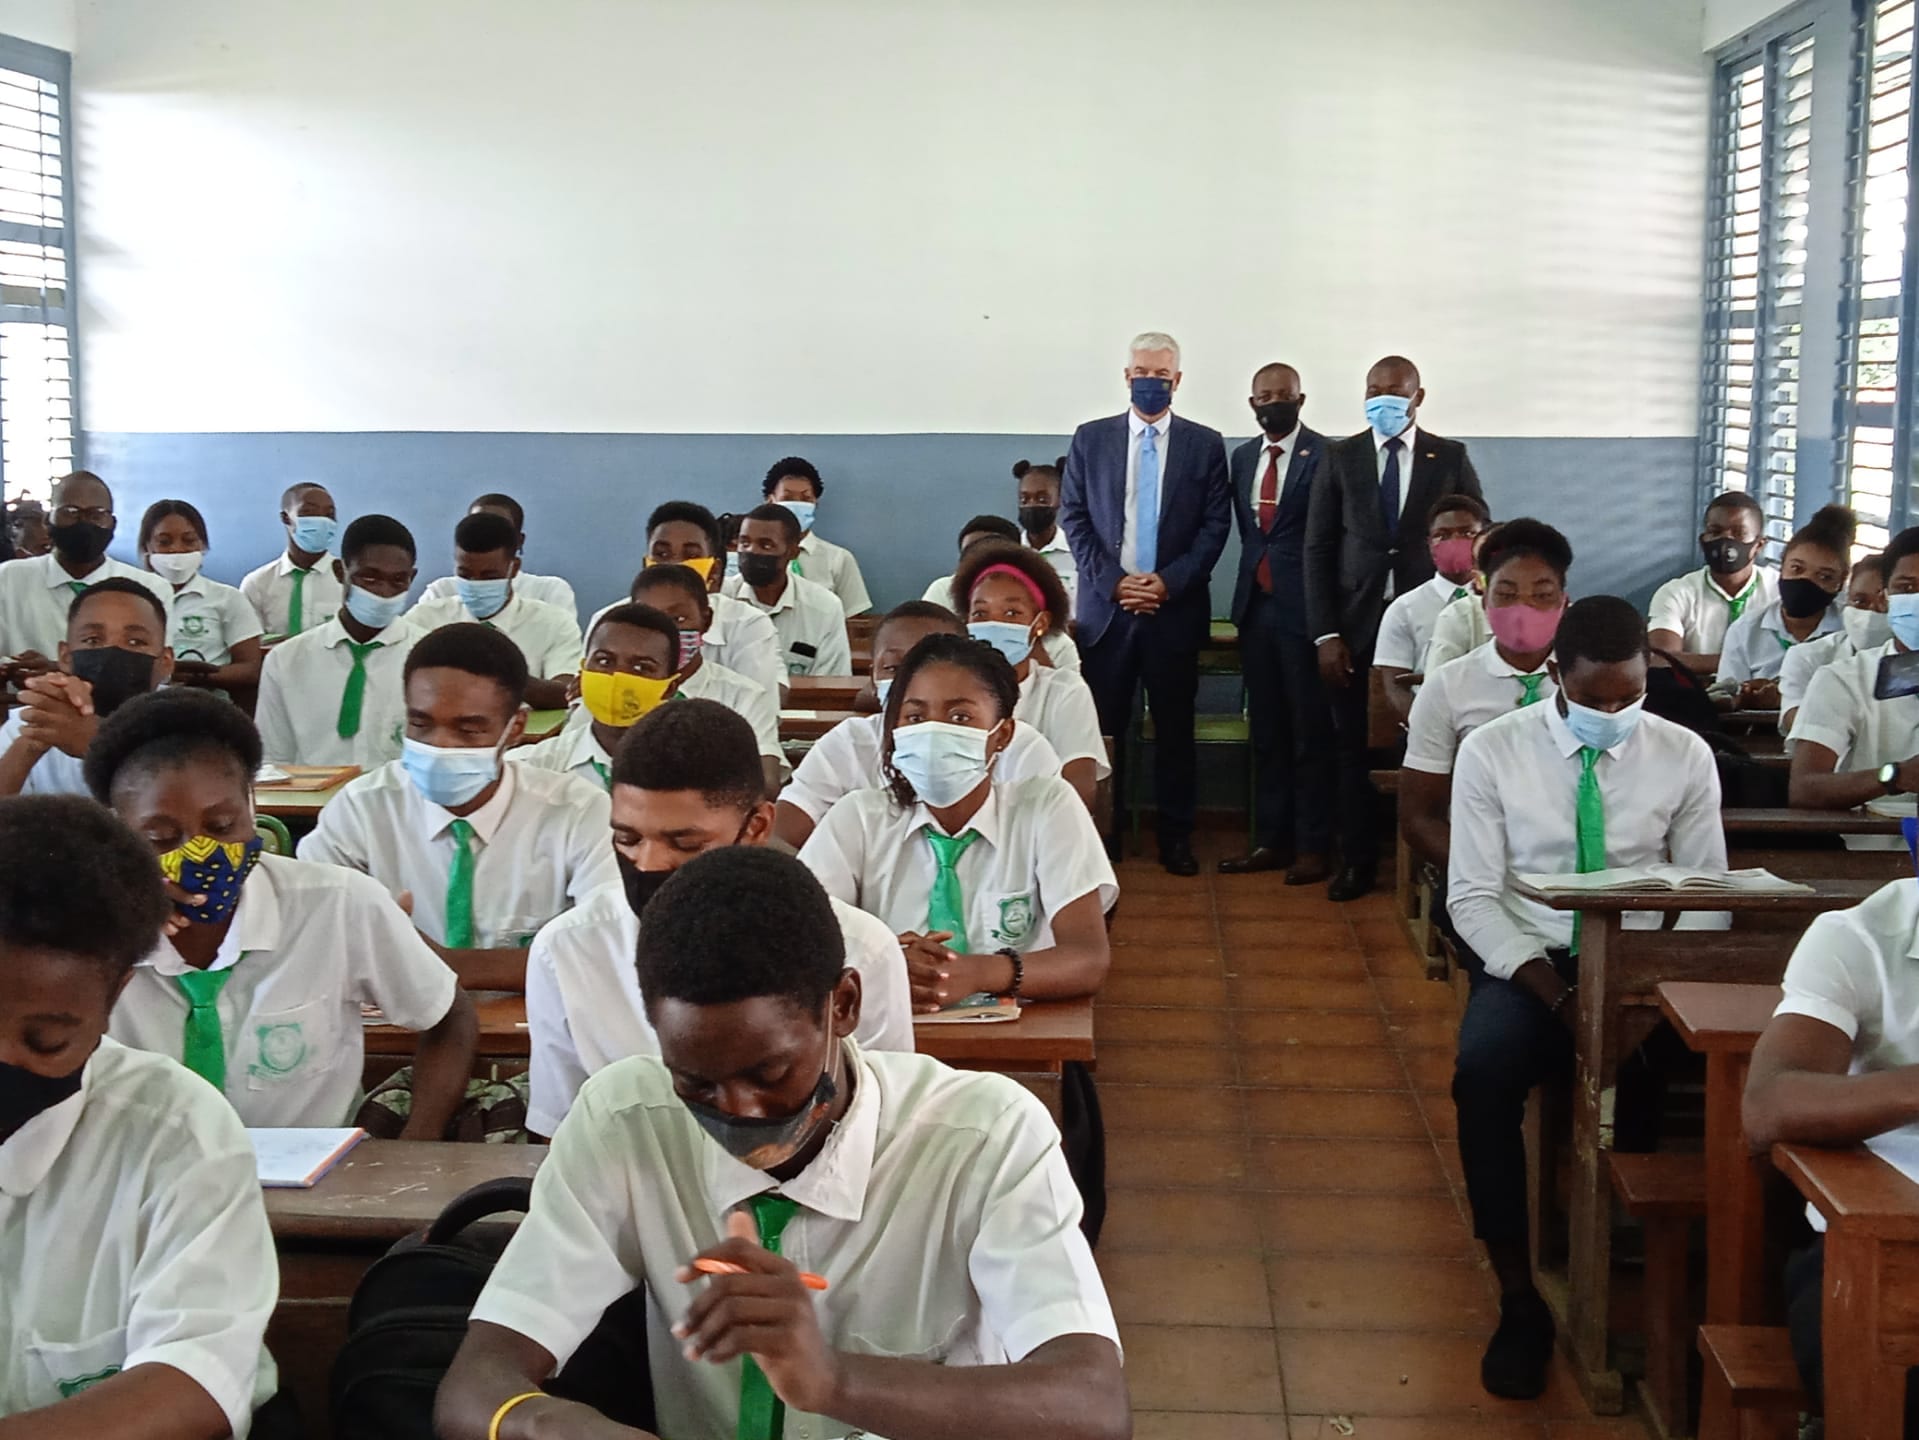 La embajada de Portugal en Guinea Ecuatorial dona una mini biblioteca al instituto Rey Malabo